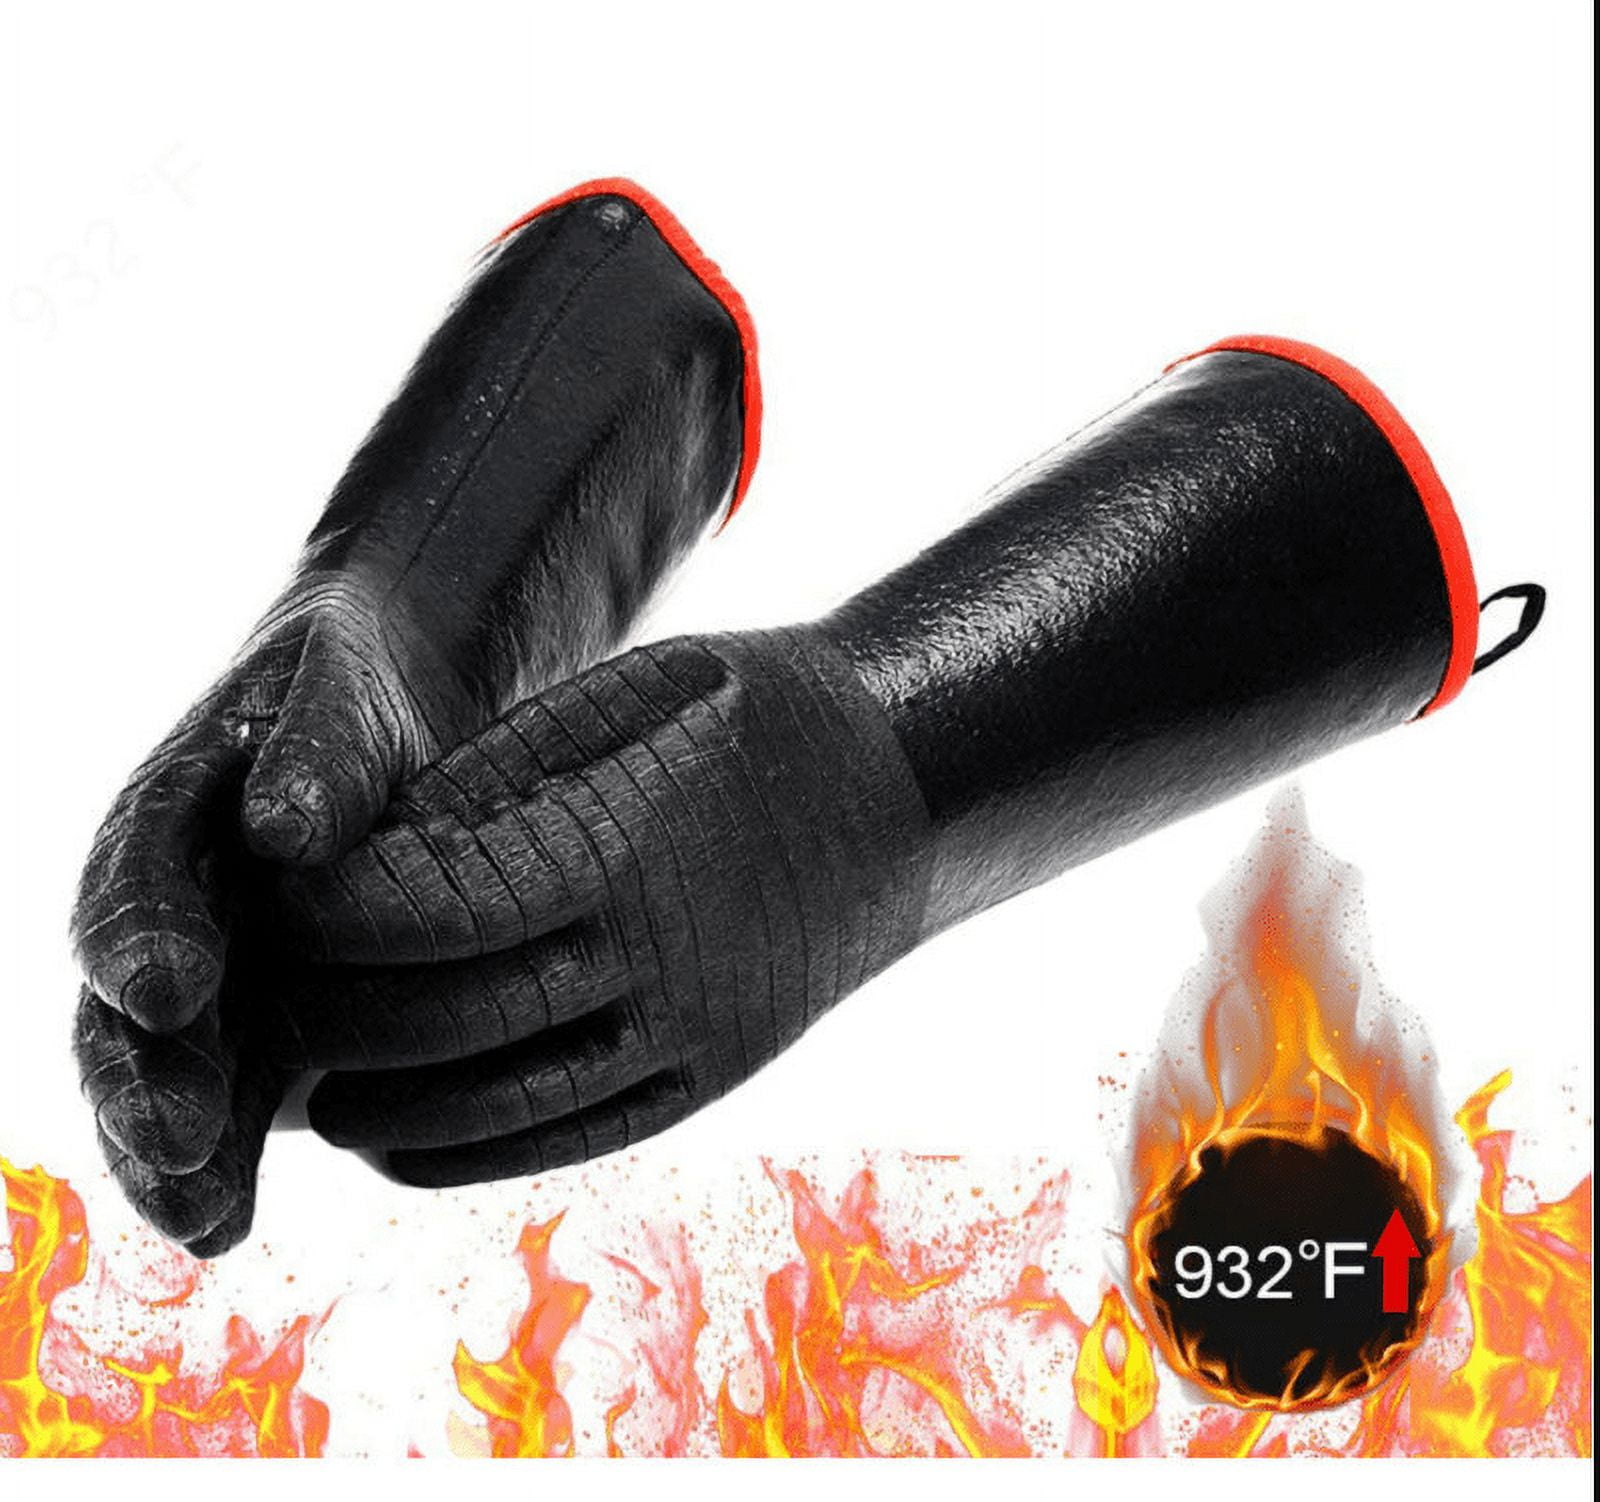 HIGH Temp Grill Gloves 